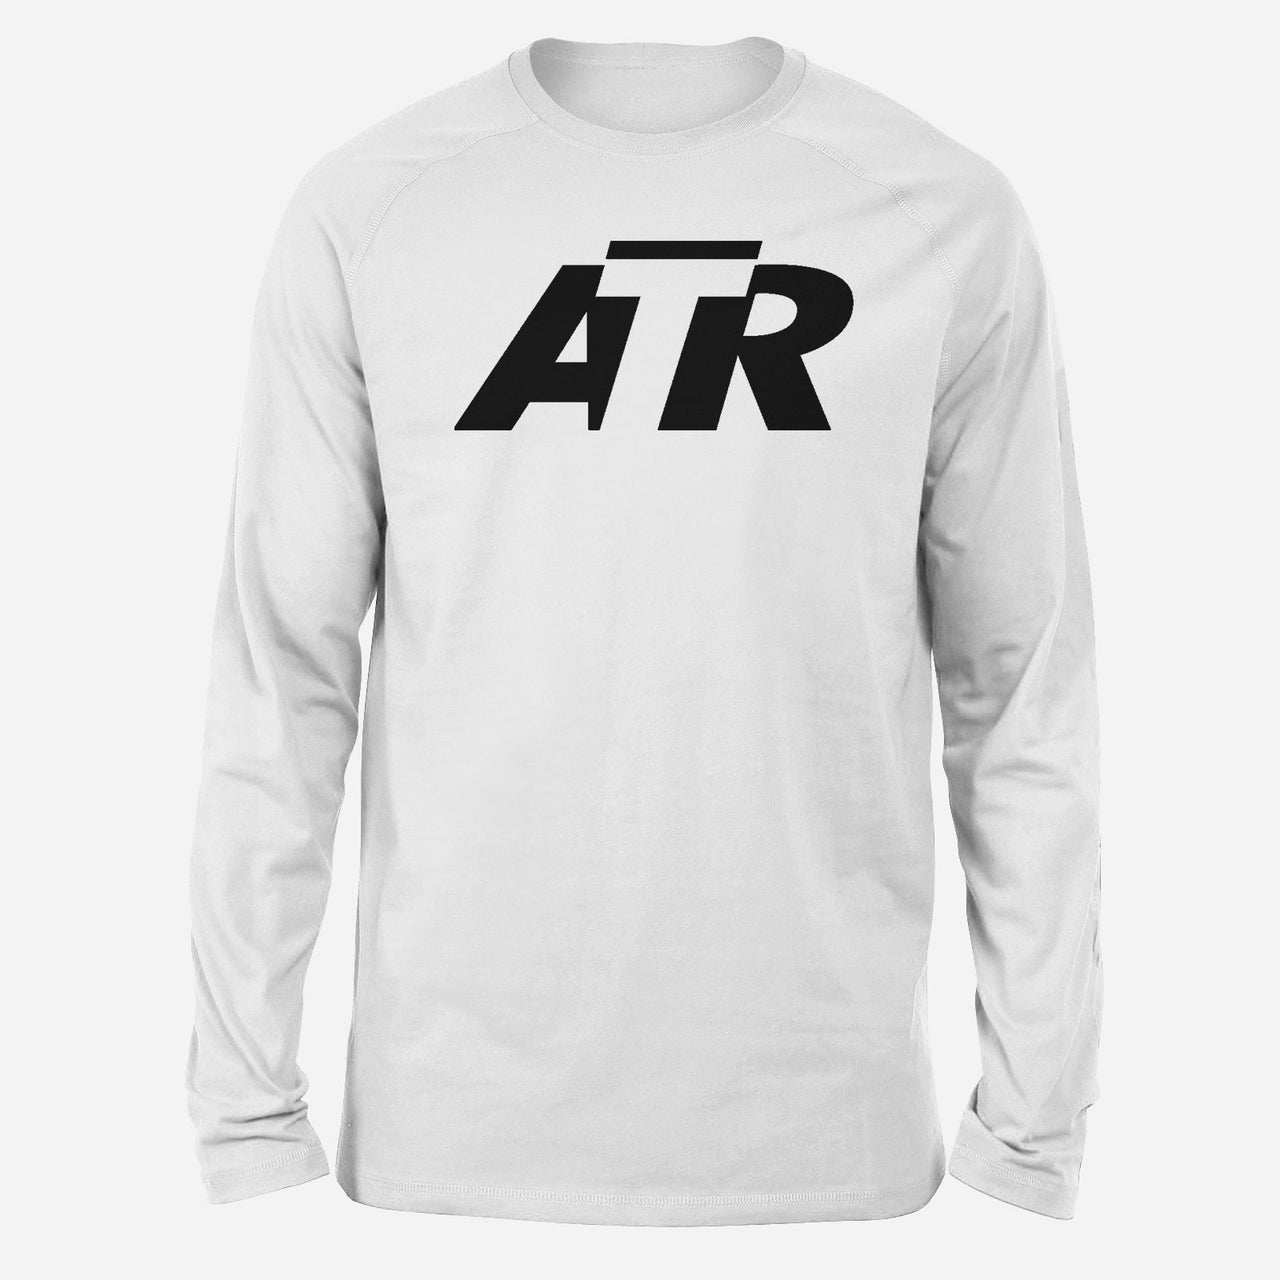 ATR & Text Designed Long-Sleeve T-Shirts